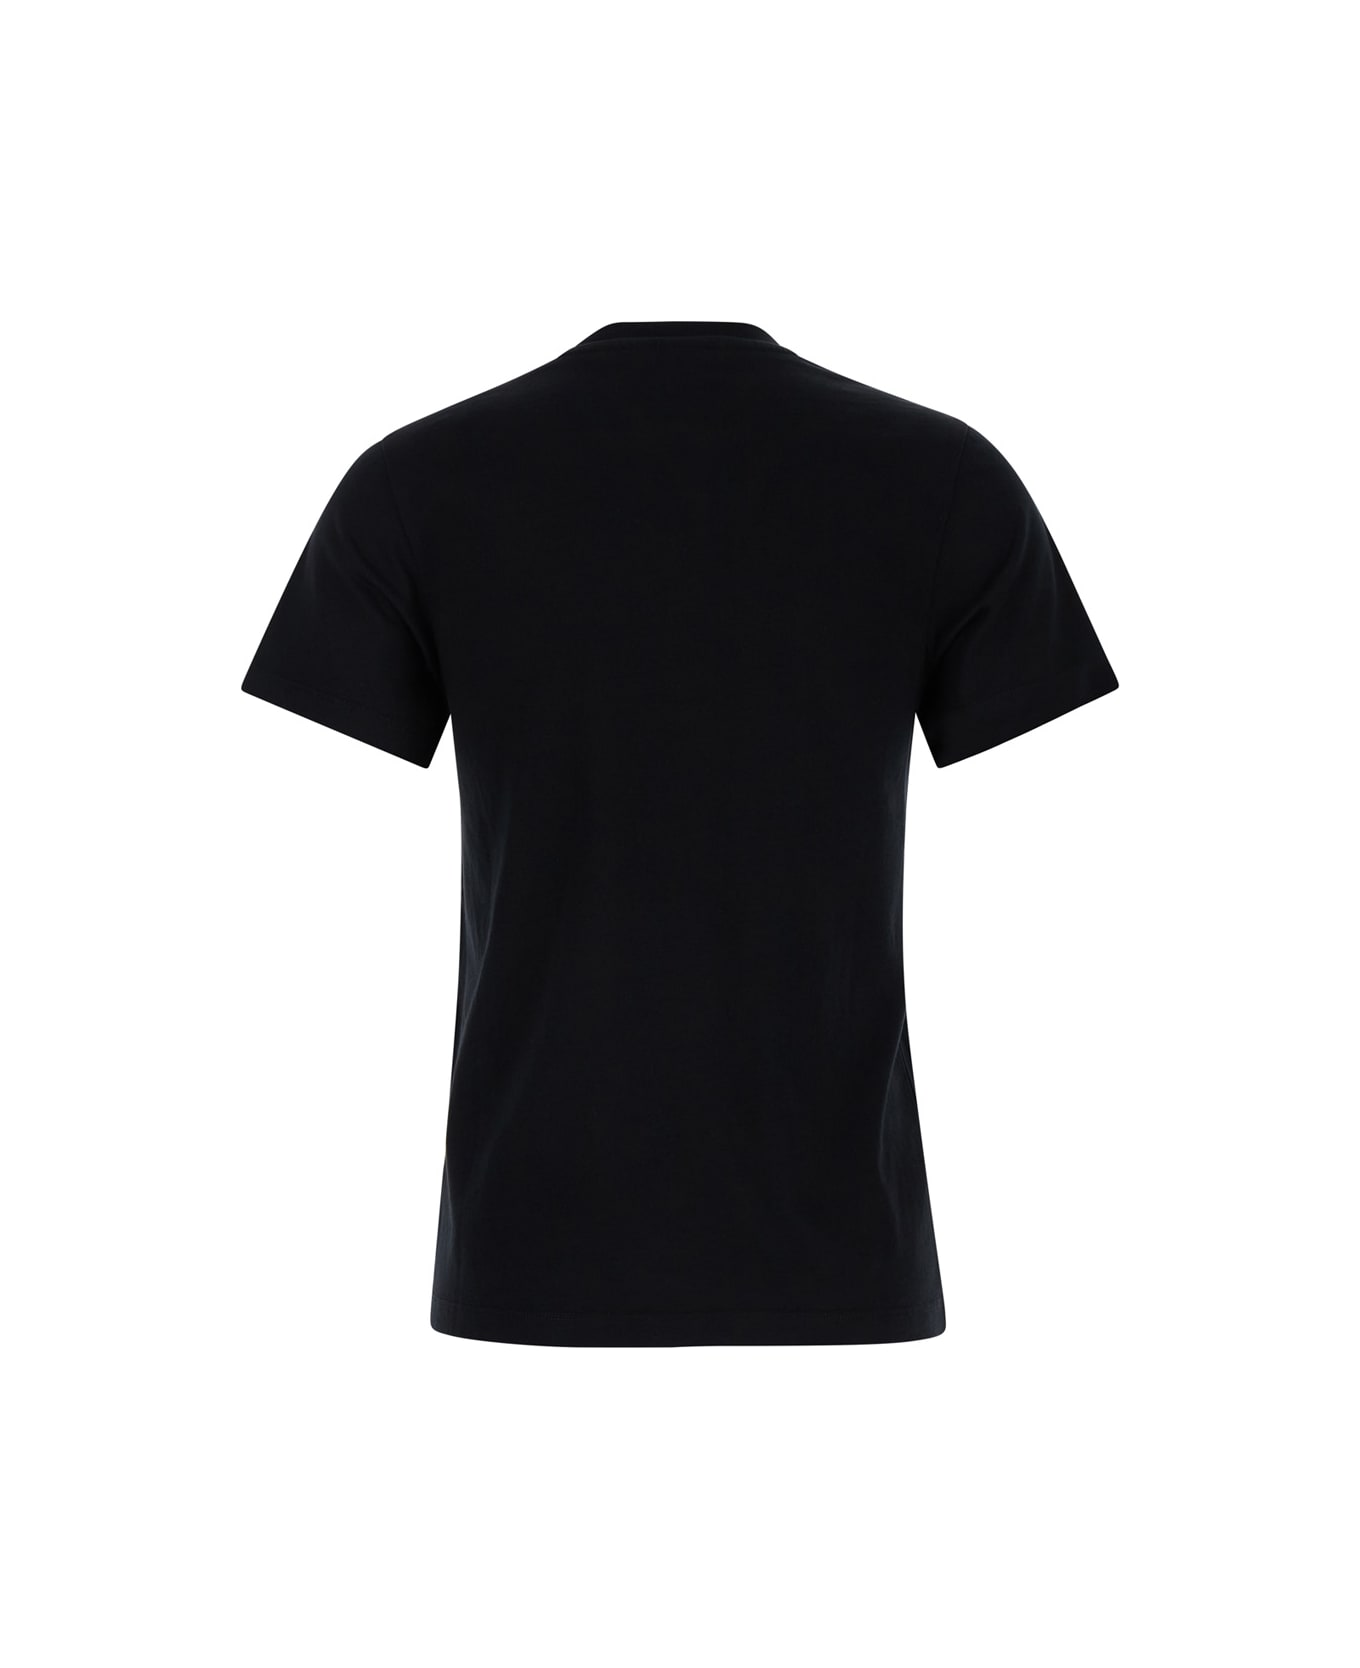 Maison Kitsuné Black T-shirt With Fox Head Patch In Cotton Woman - Black